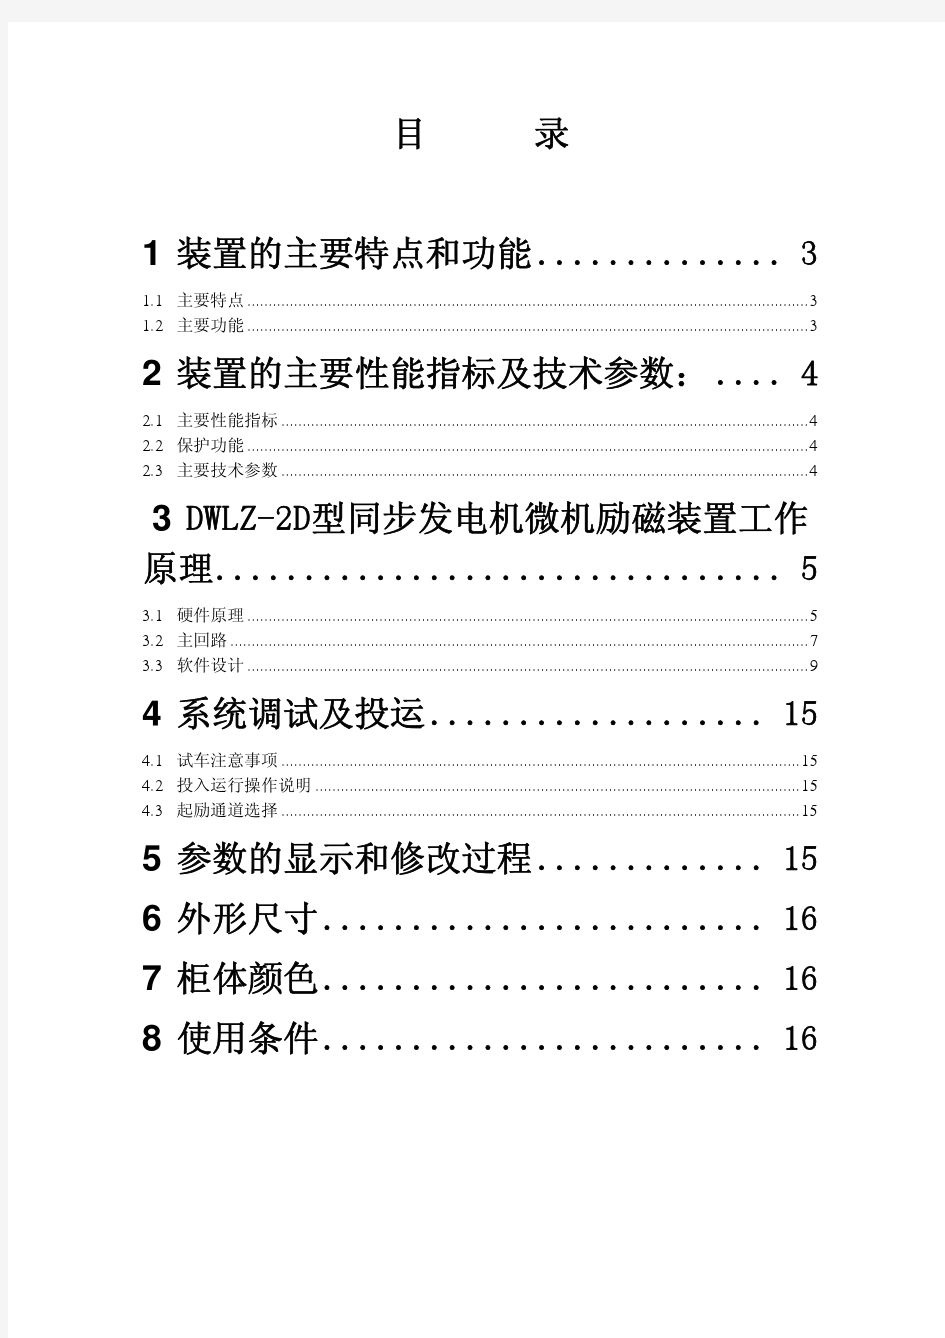 DWLZ-2D中文用户手册